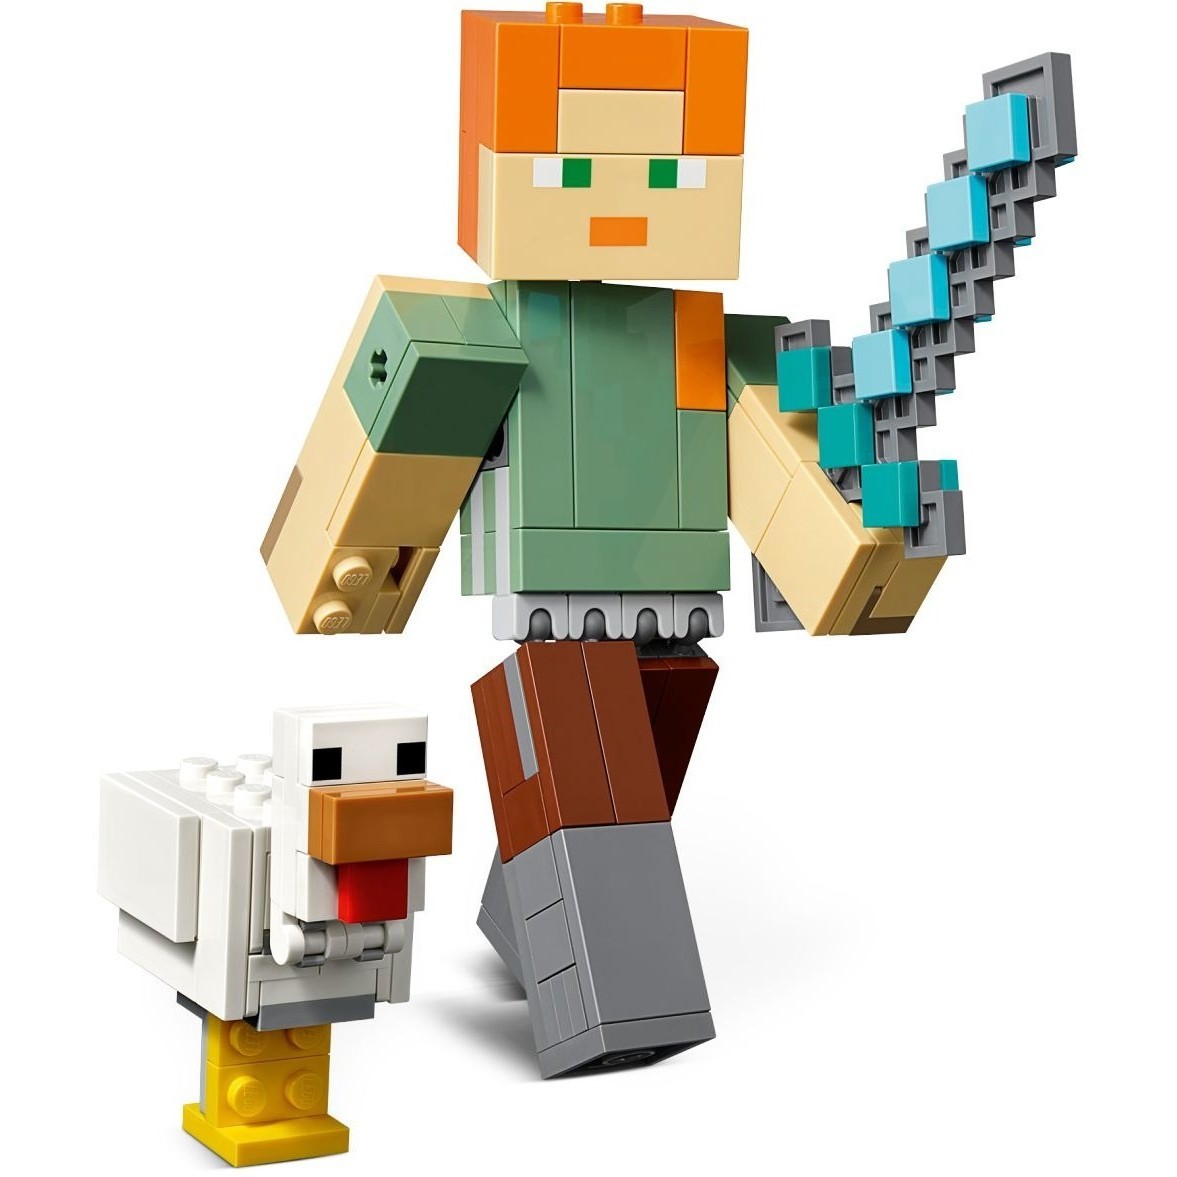 Конструктор Lego Alex BigFig with Chicken 21149